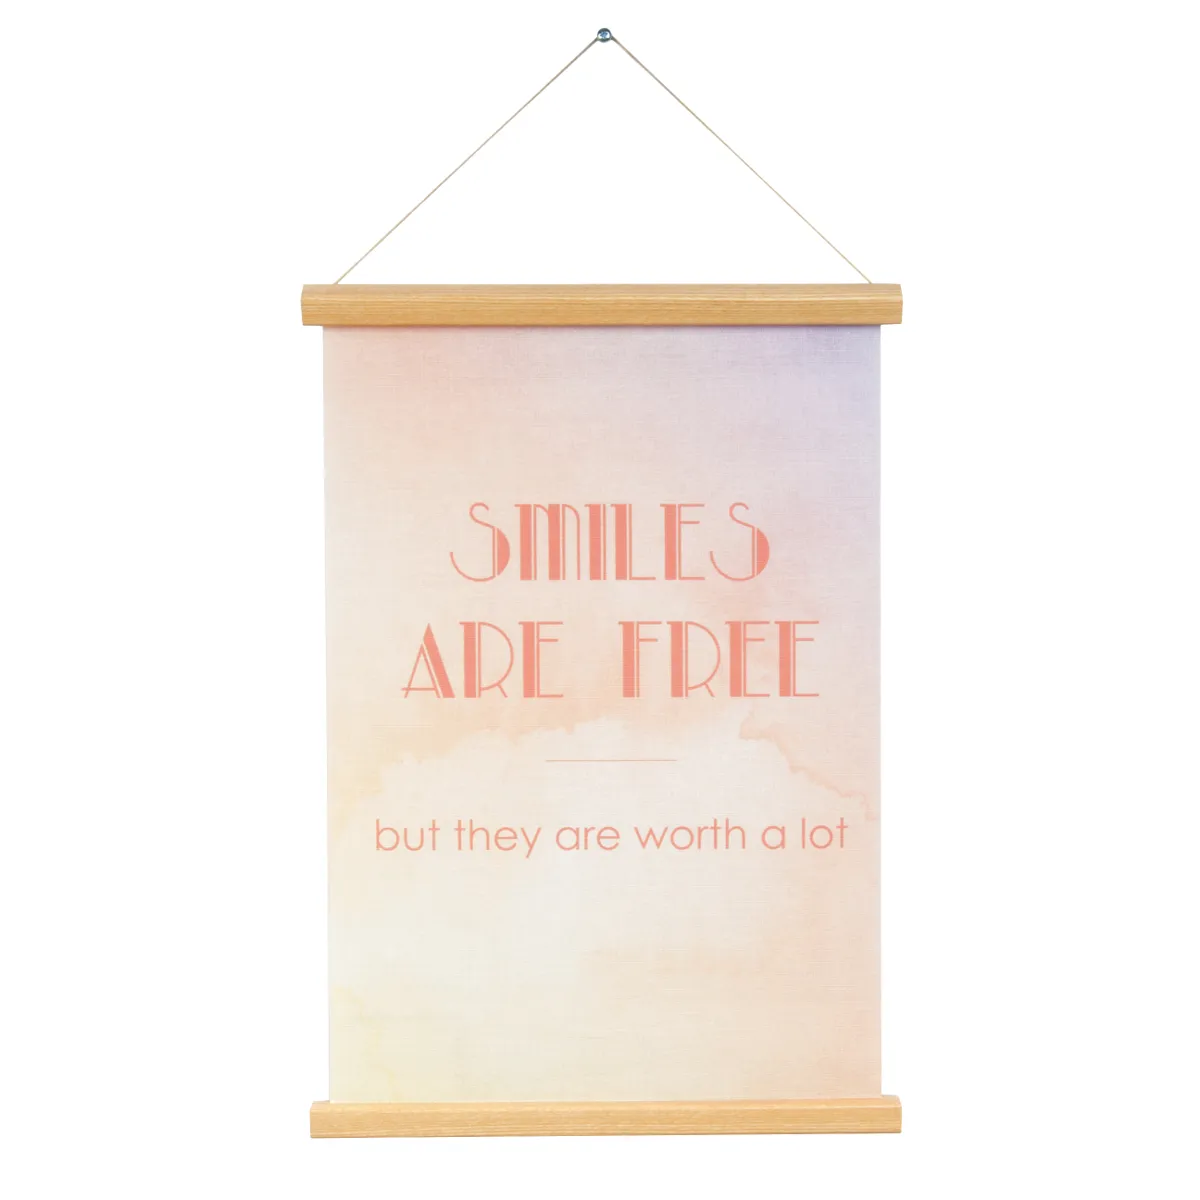 Toile pour poster - Smiles are free...